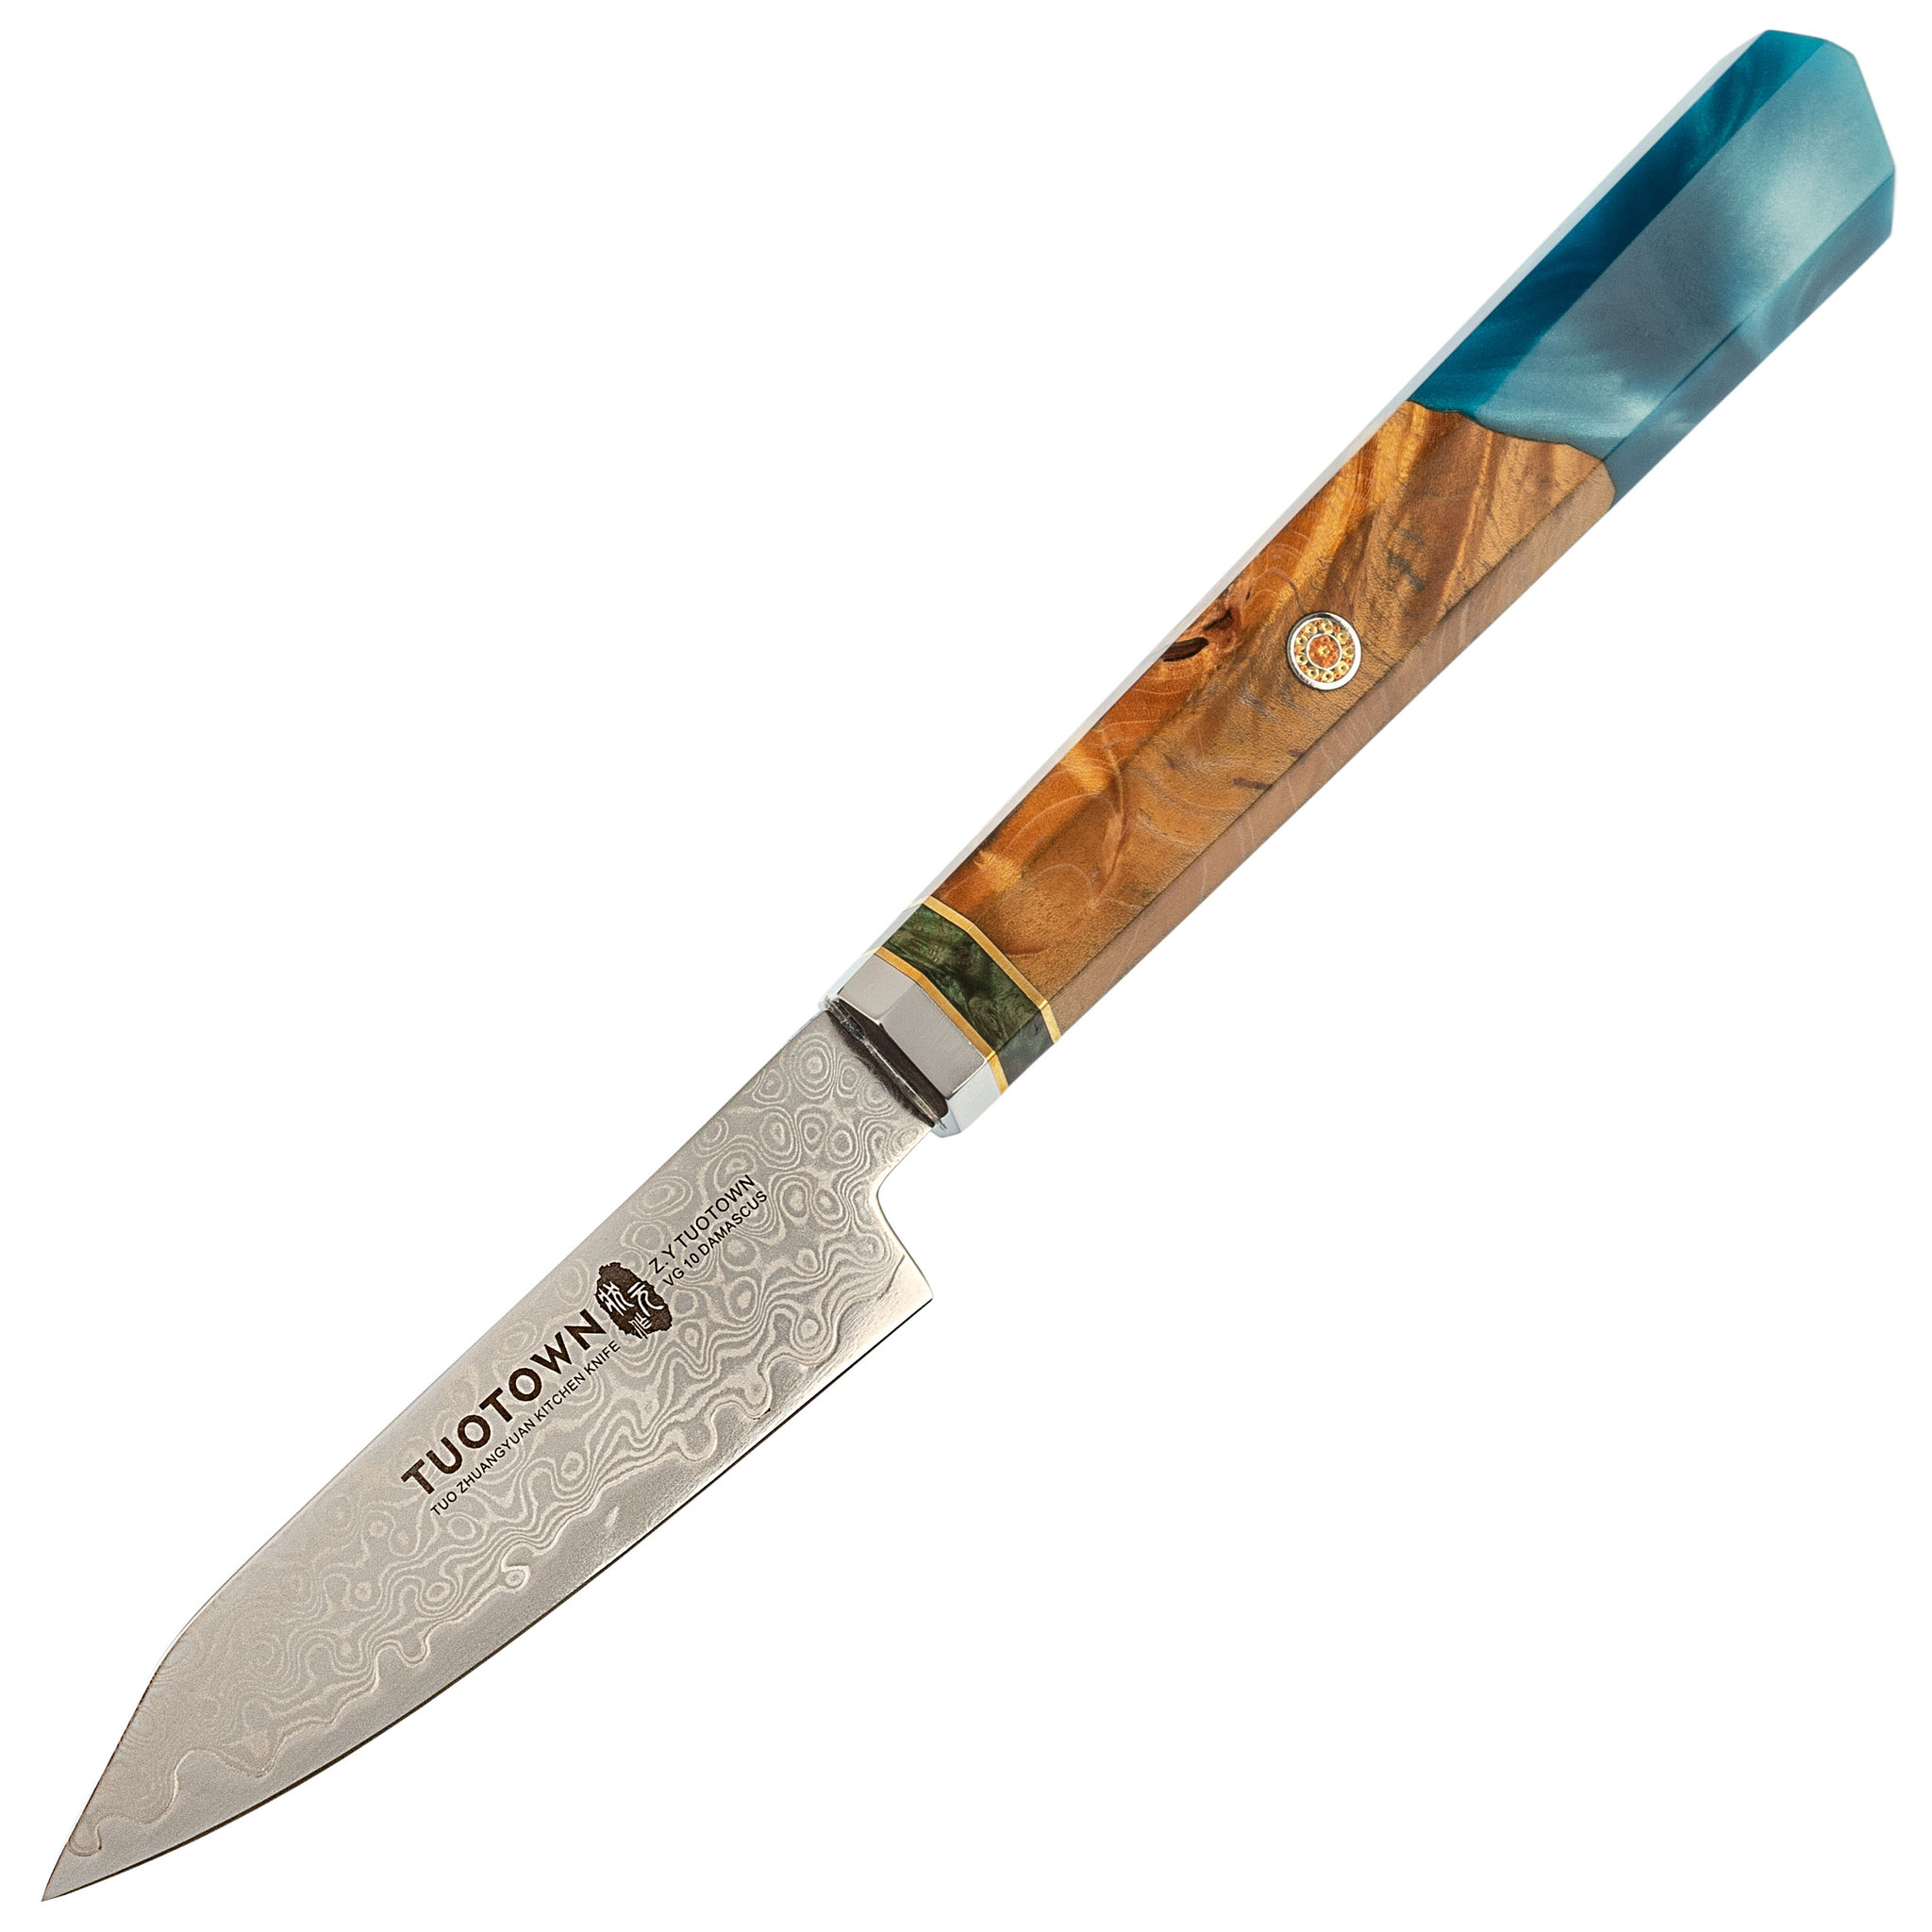 Кухонный нож Tuotown, сталь VG10, рукоять дерево/эпоксидка